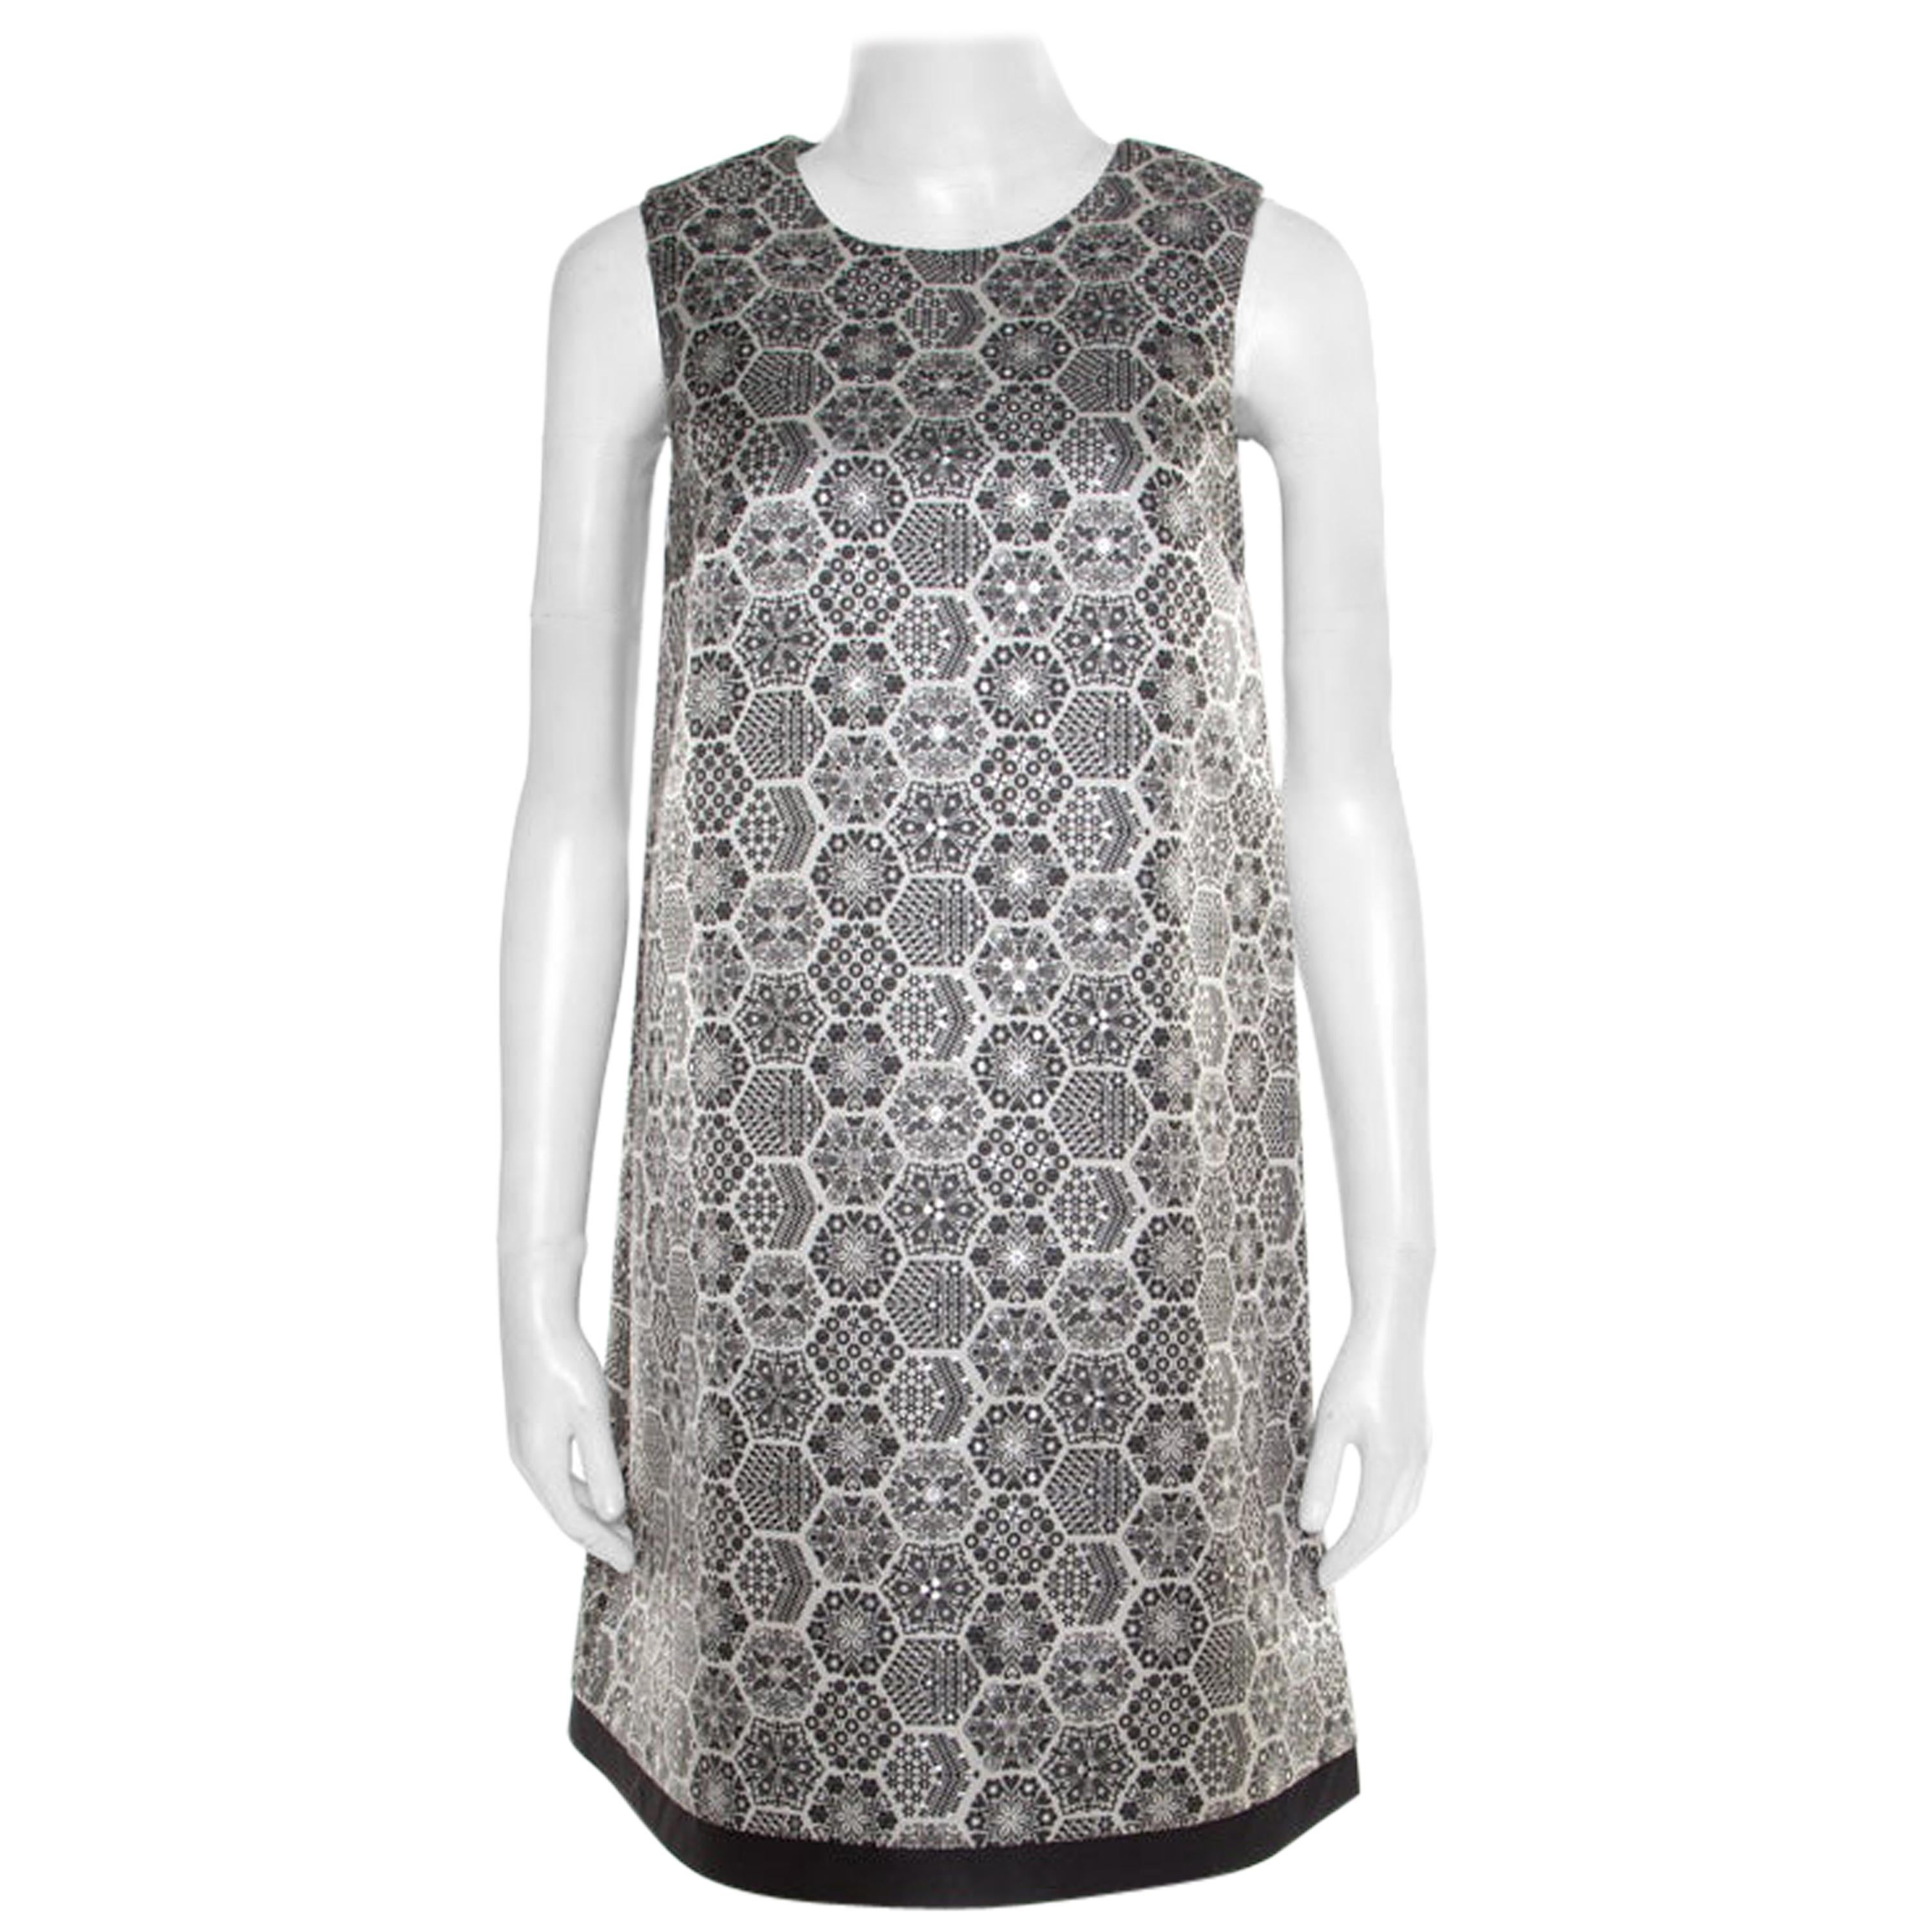 Gucci Monochrome Metallic Floral Jacquard Sleeveless Dress S